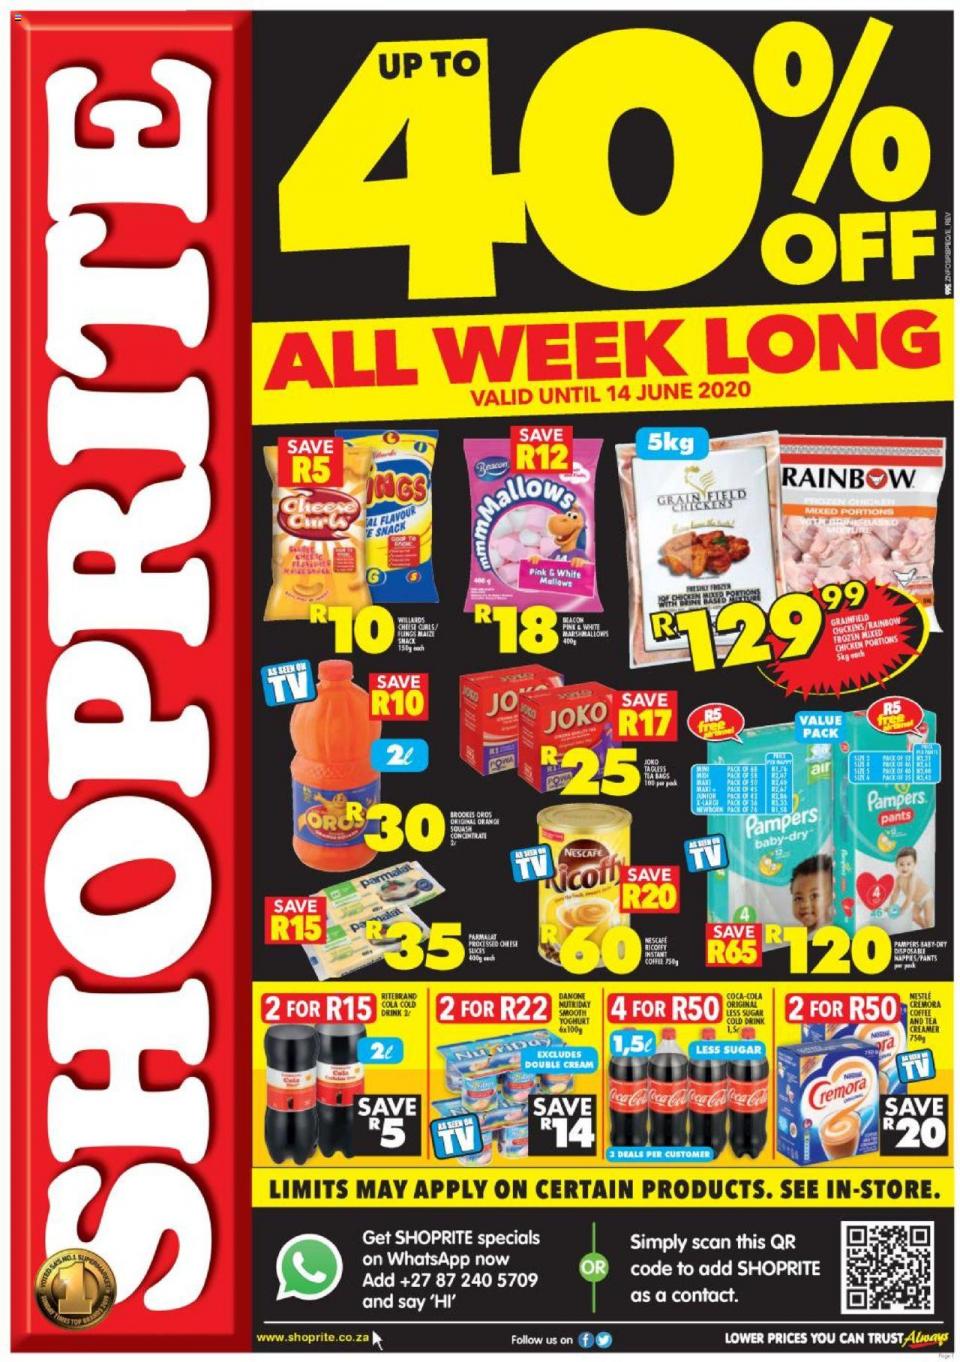 Shoprite Specials 40% Off All Week Long 8 June 2020